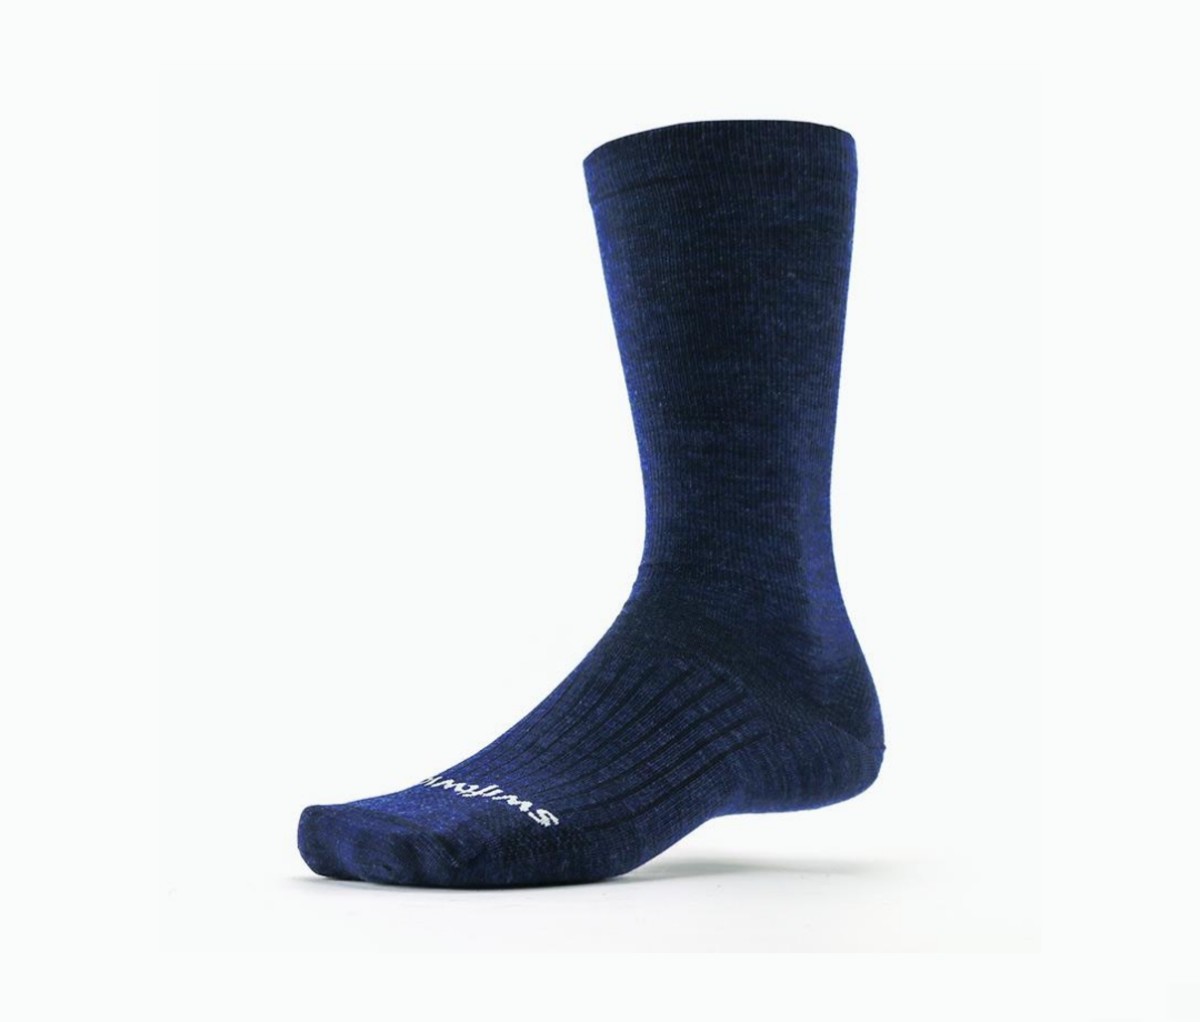 Swiftwick Pursuit Socks travel clothes